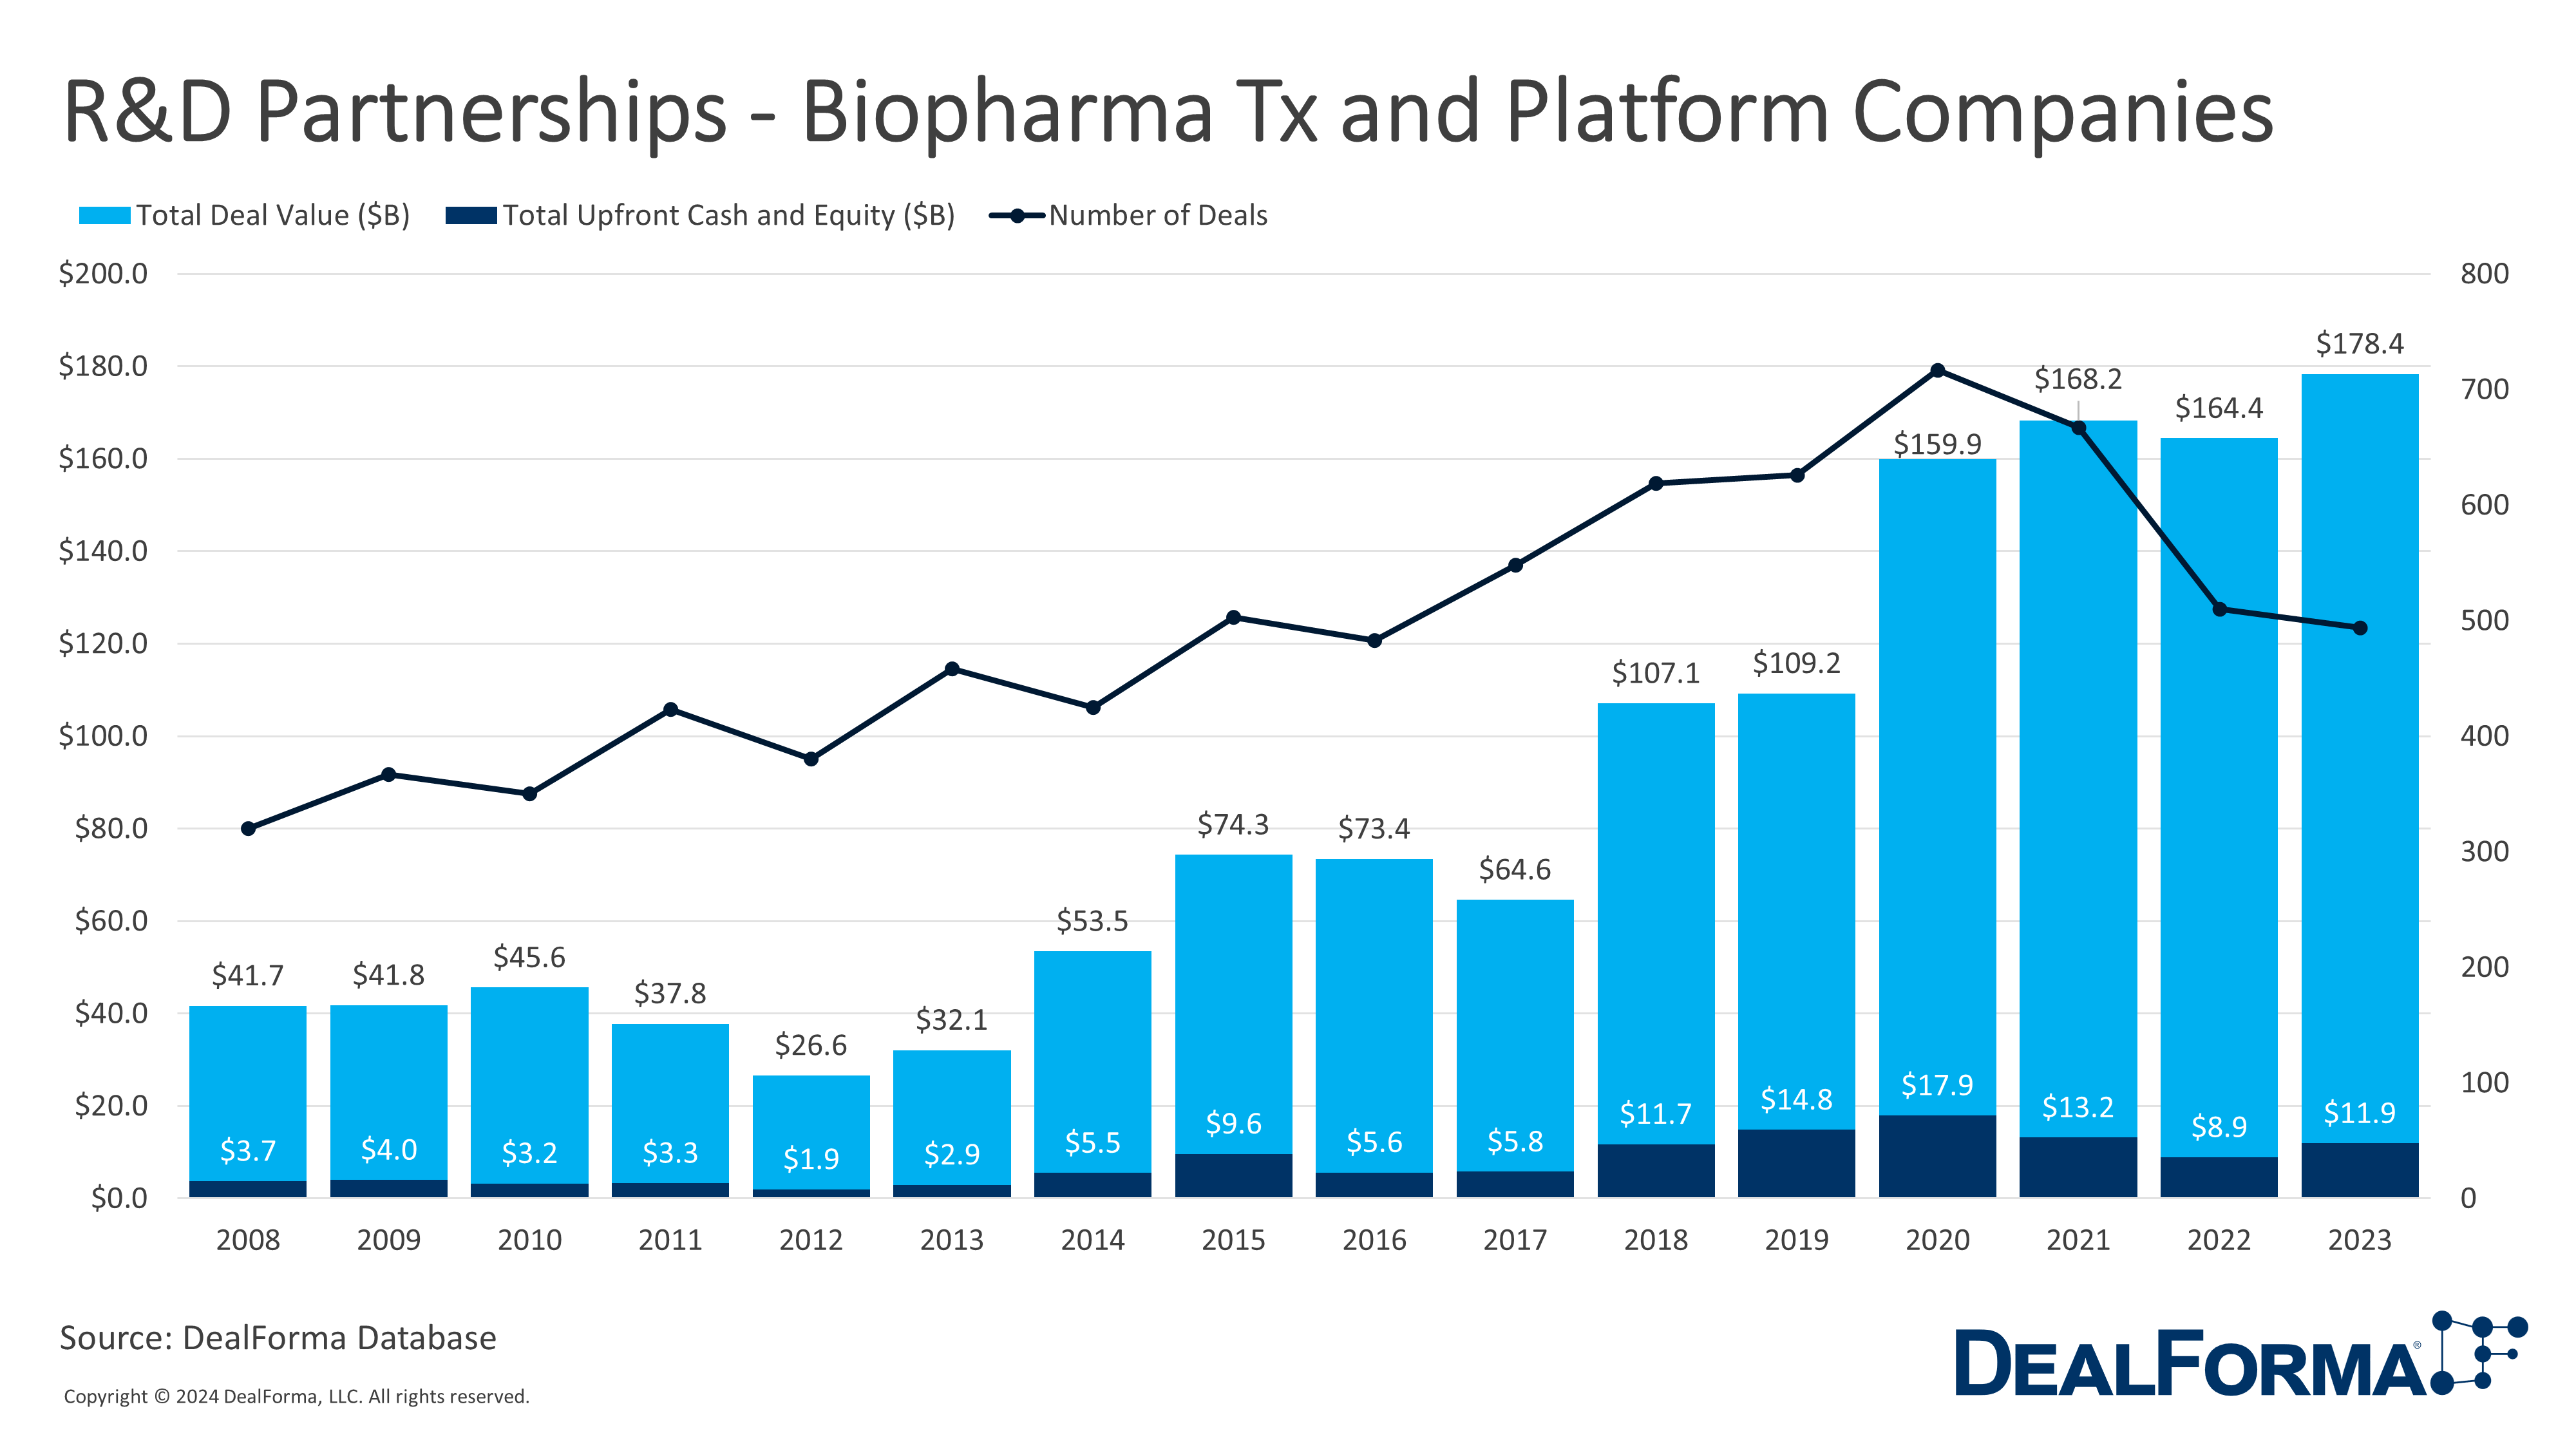 R&D Partnerships - Biopharma Tx and Platform Companies - DealForma